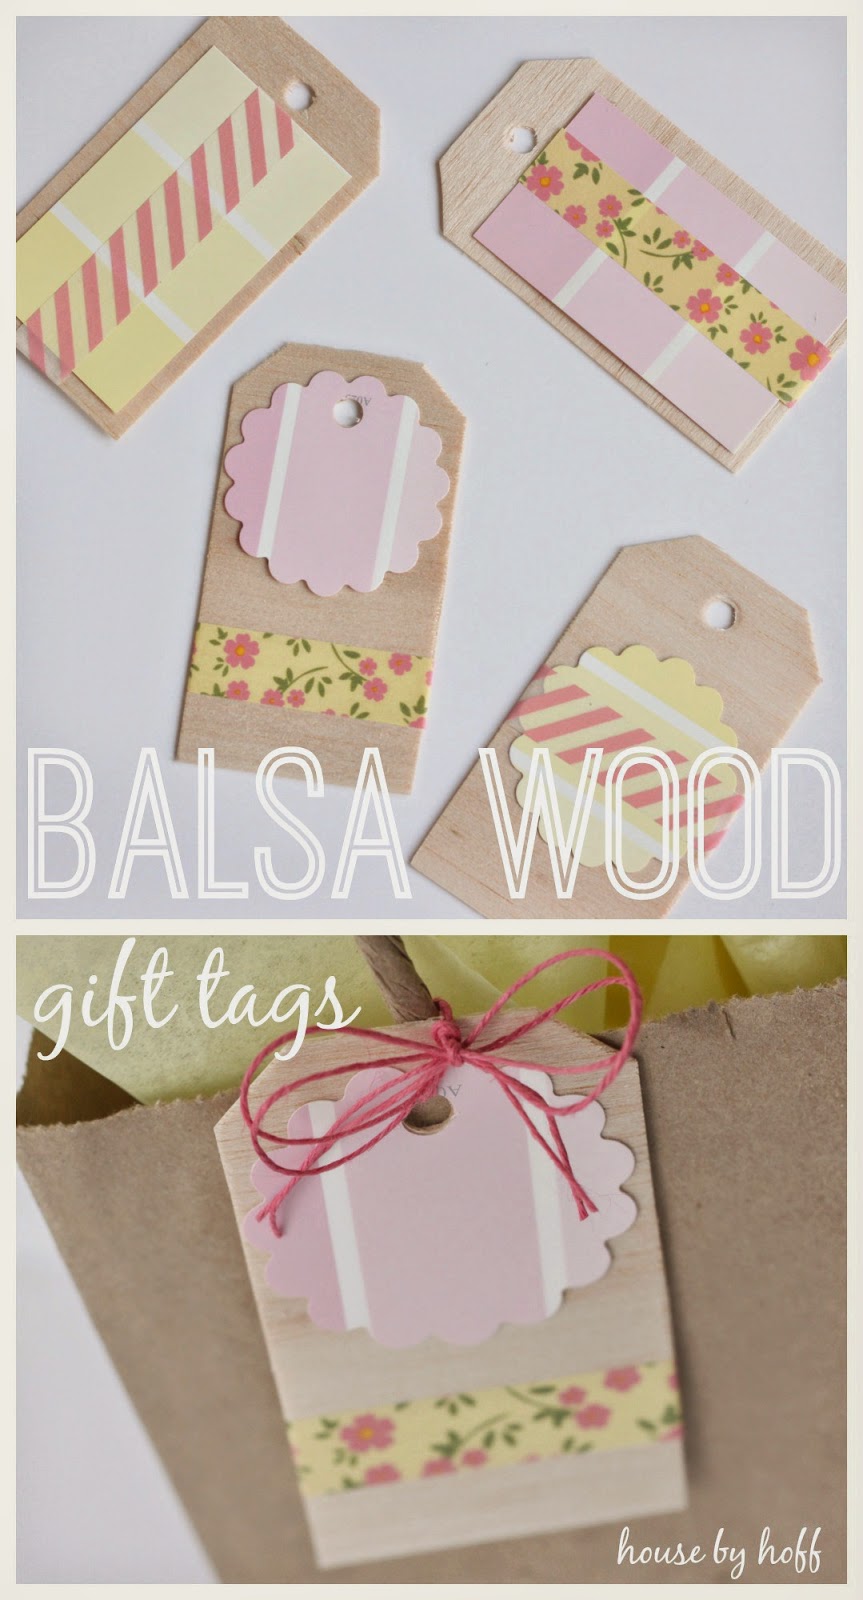 Balsa wood gift tags poster.